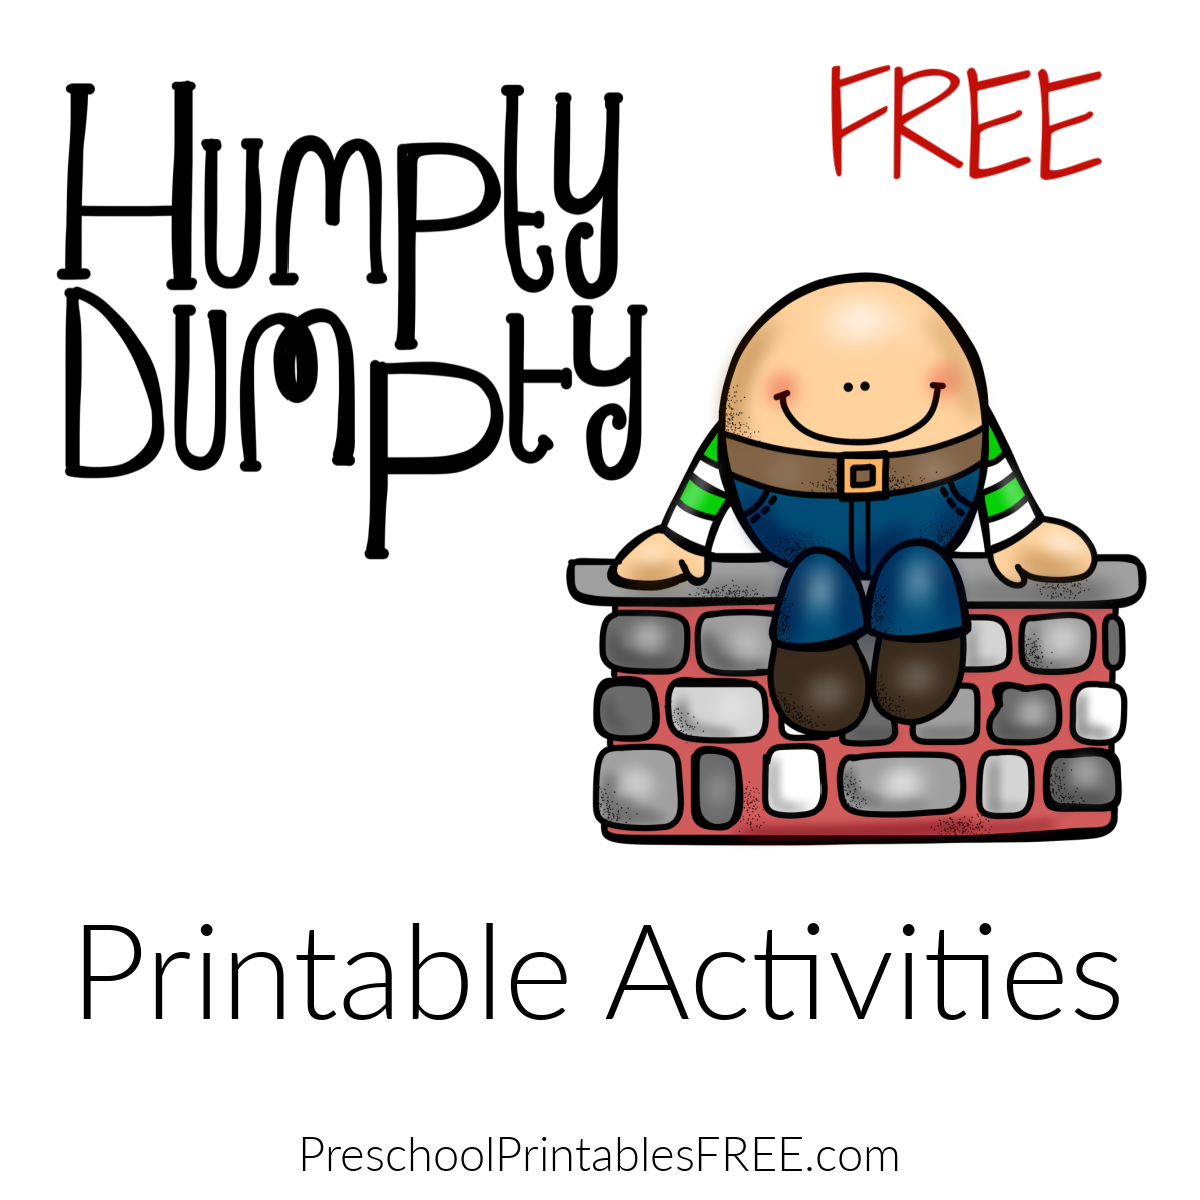 Humpty dumpty printables free â free preschool printables